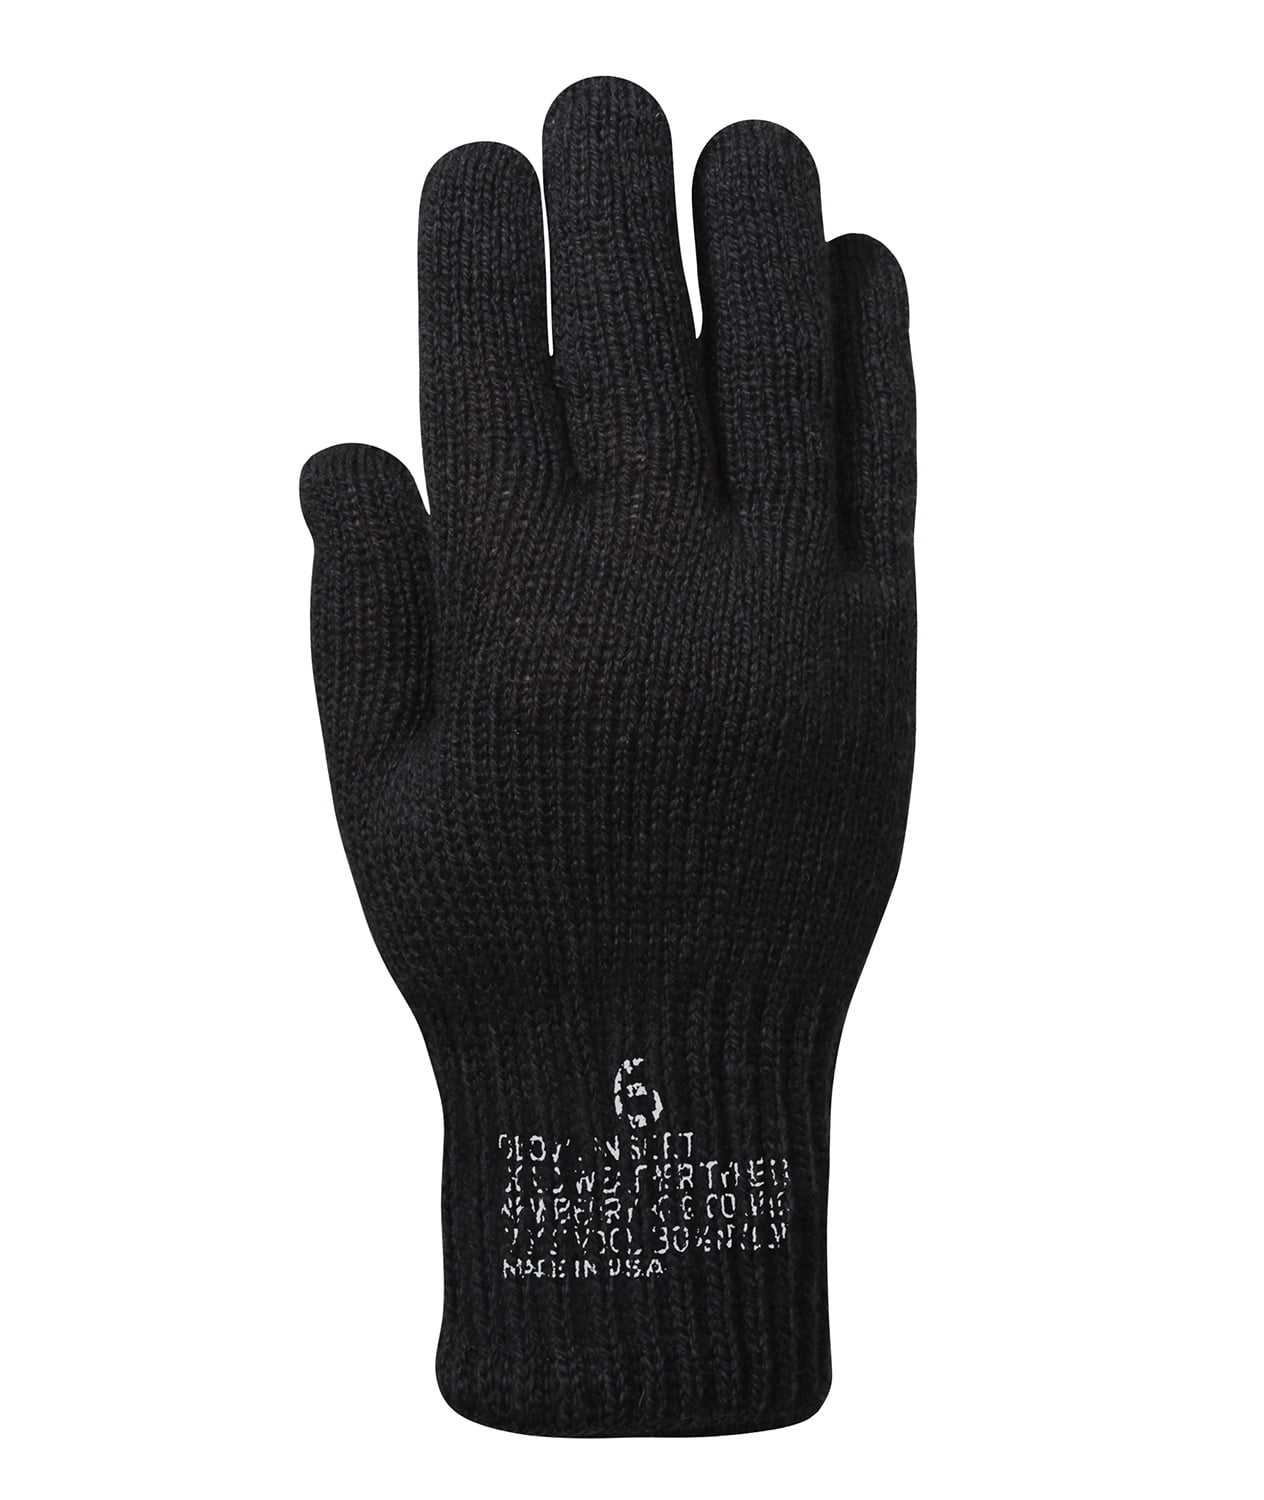 5 Glove Inserts Wool Cold Weather Military Gray USGI MEDIUM LARGE